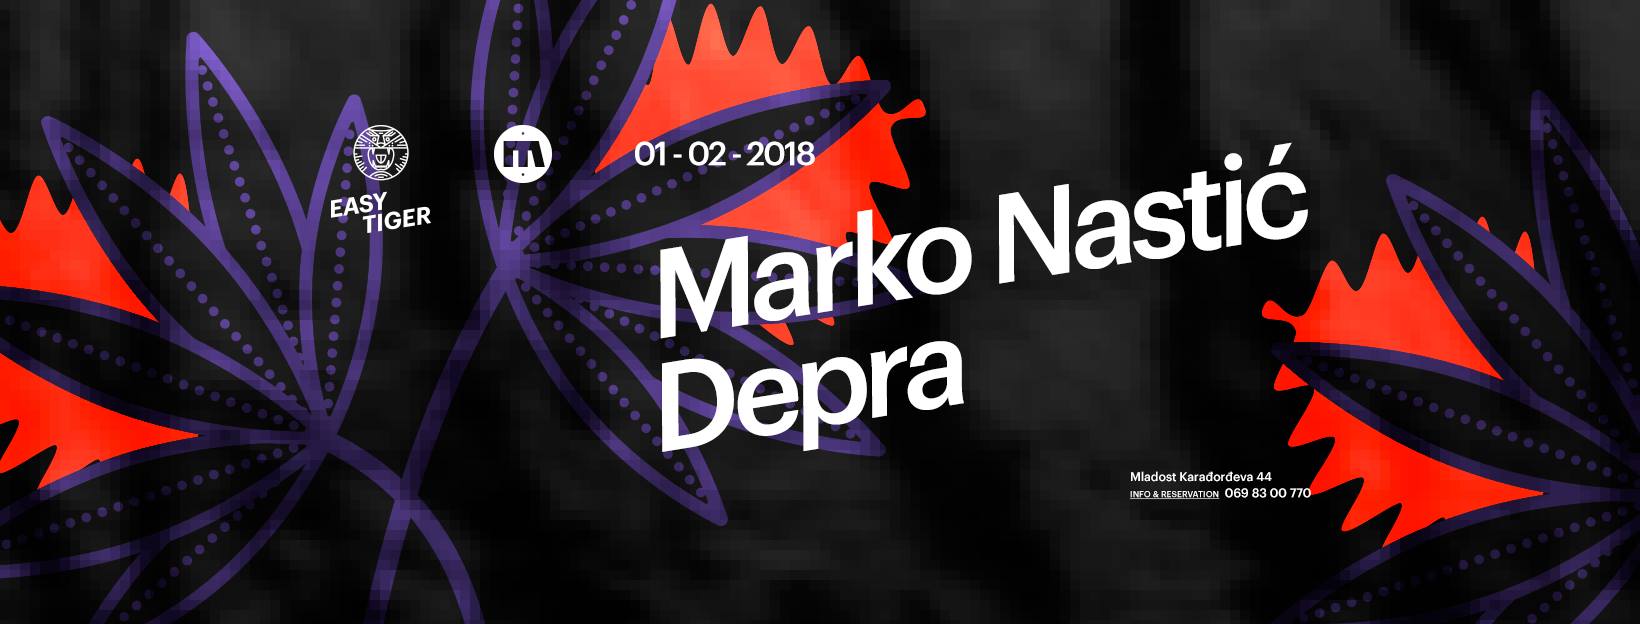 [:en]Easy Tiger / Marko Nastić & Depra 01.02.2018. Mladost